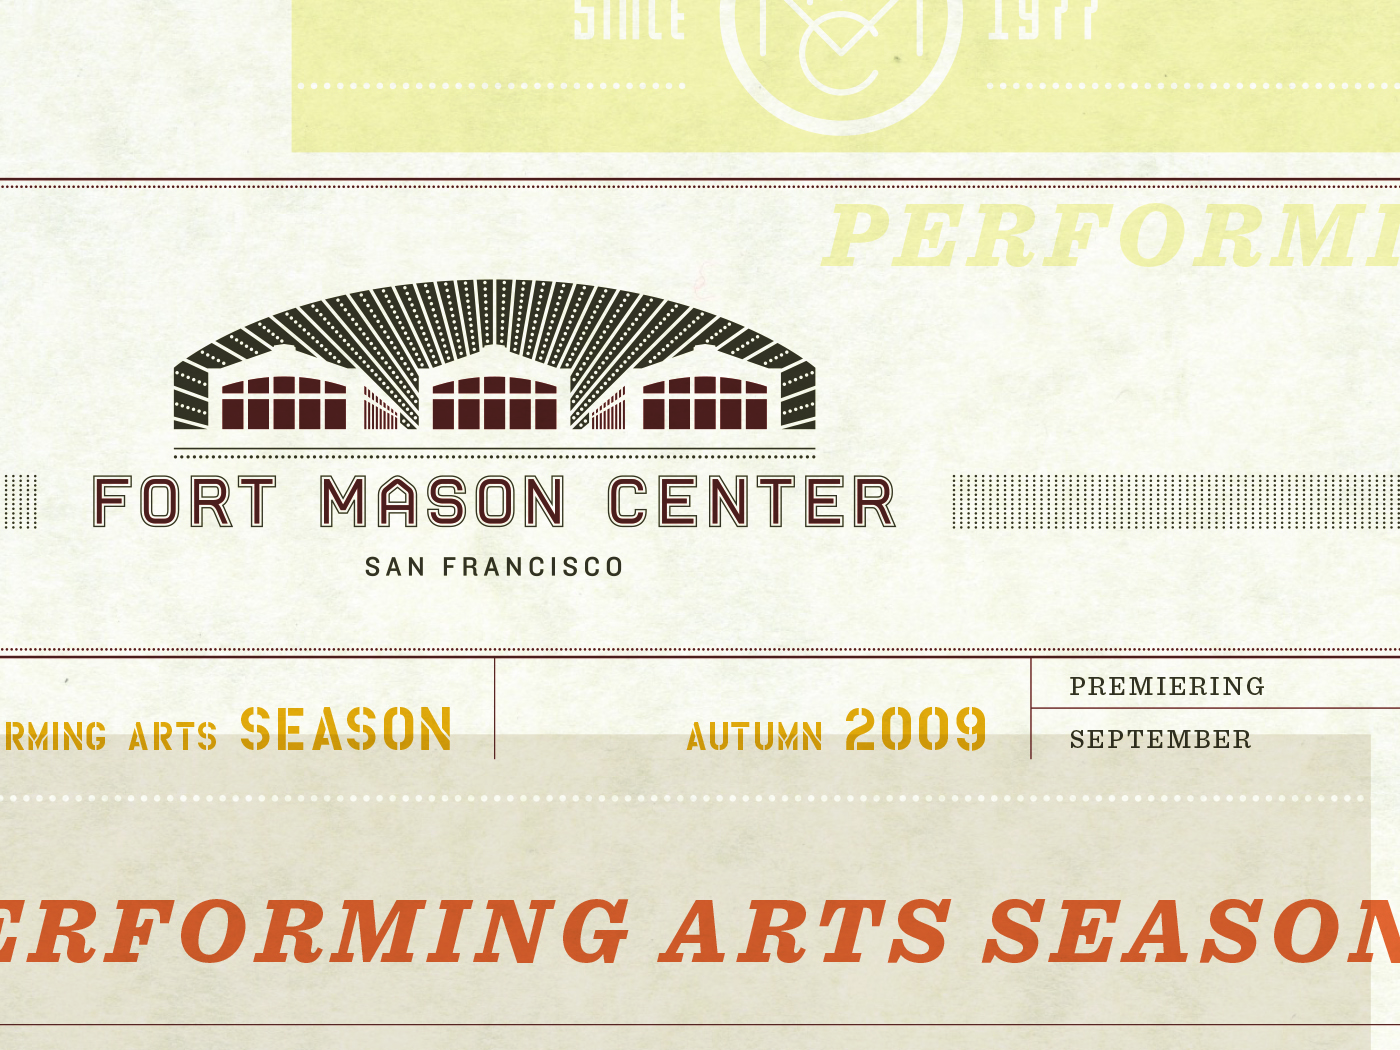 Fort Mason Center Peforming Arts Season brand boards